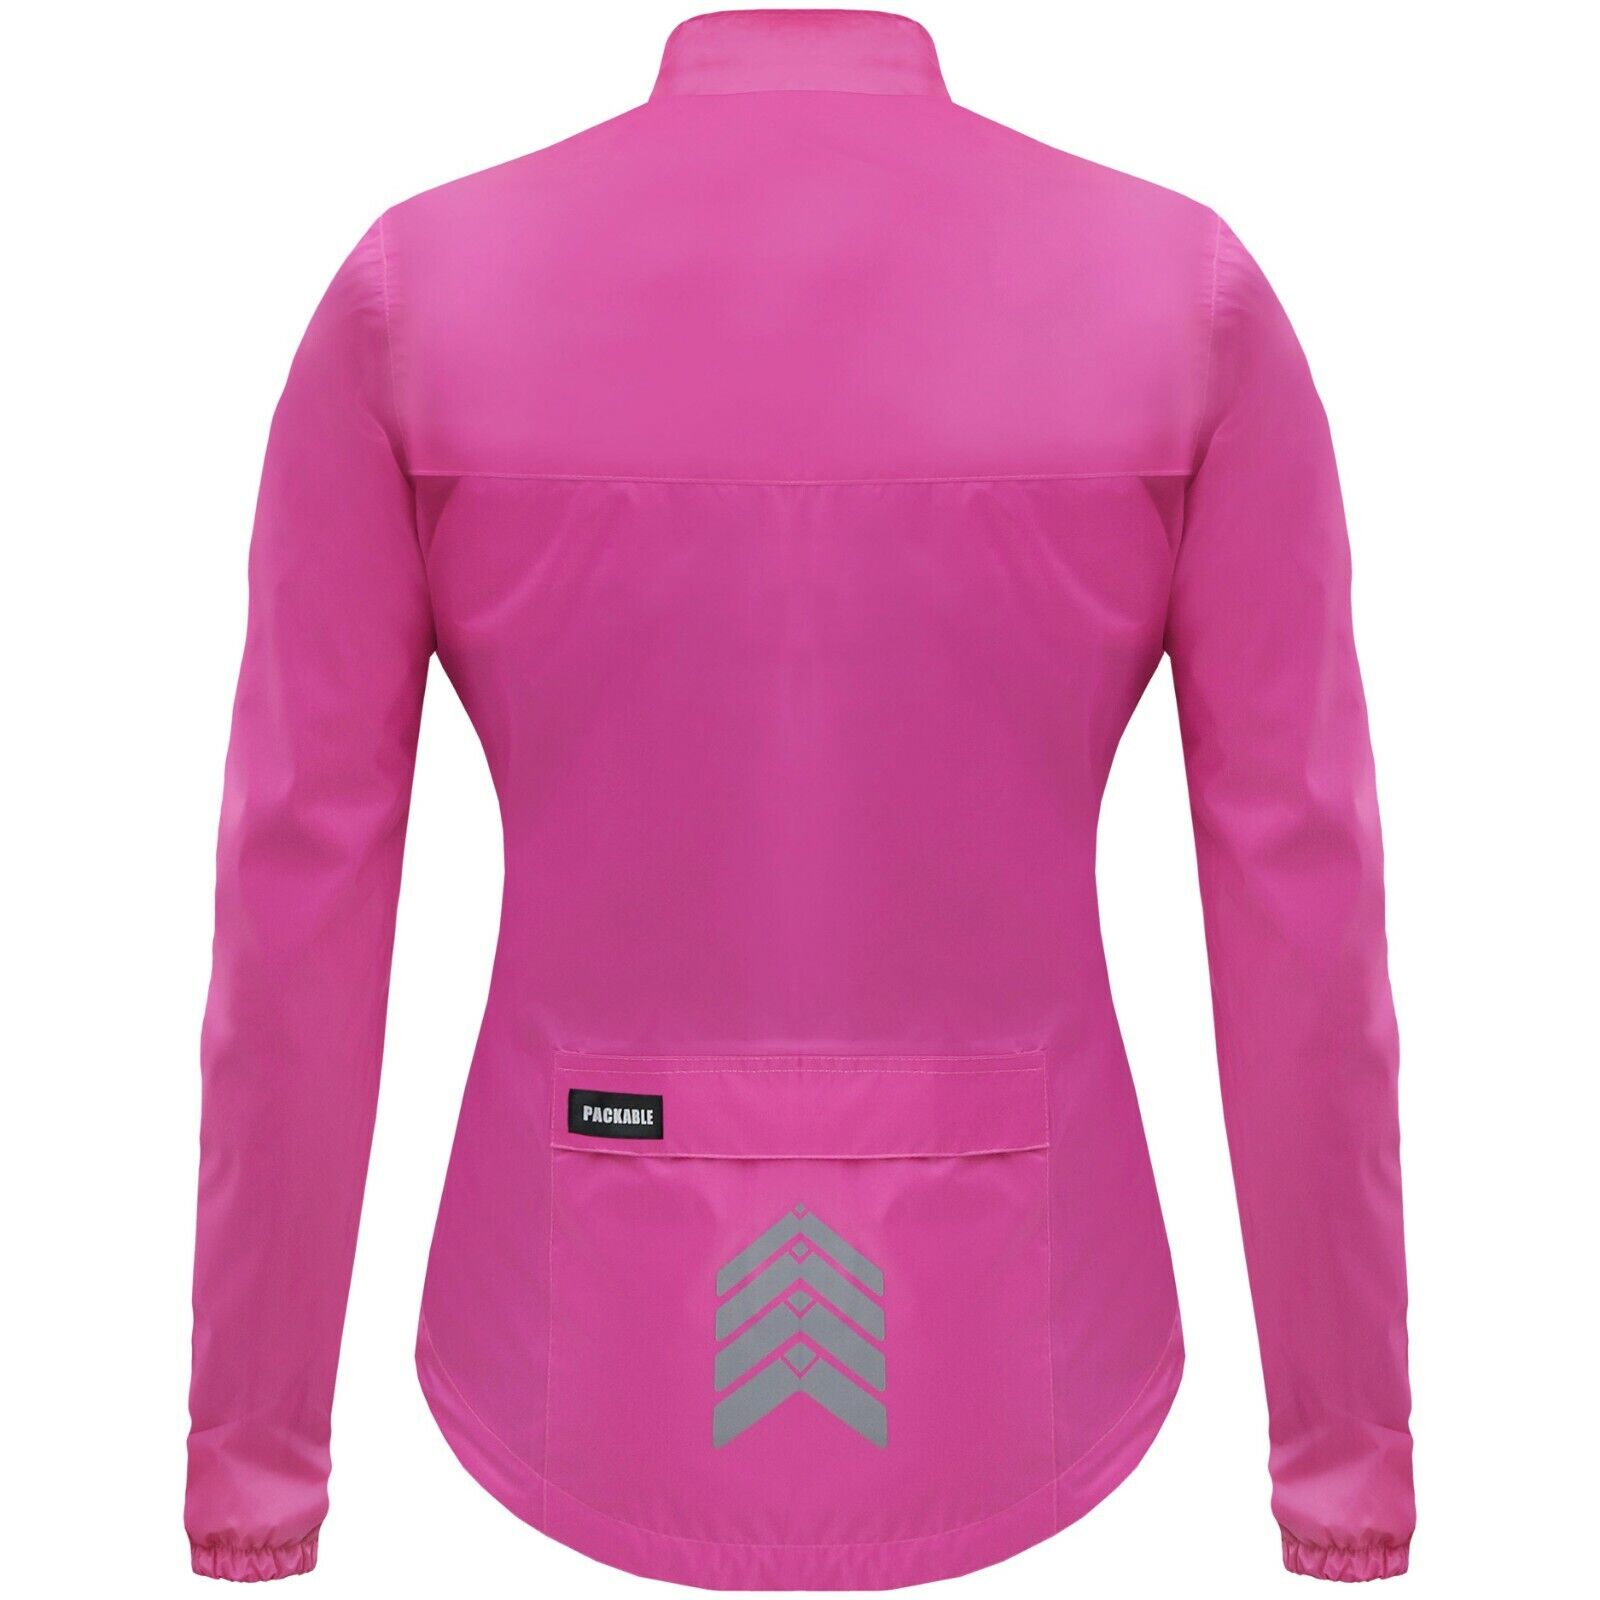 Women cycling Jacket waterproof running top breathable mesh linning